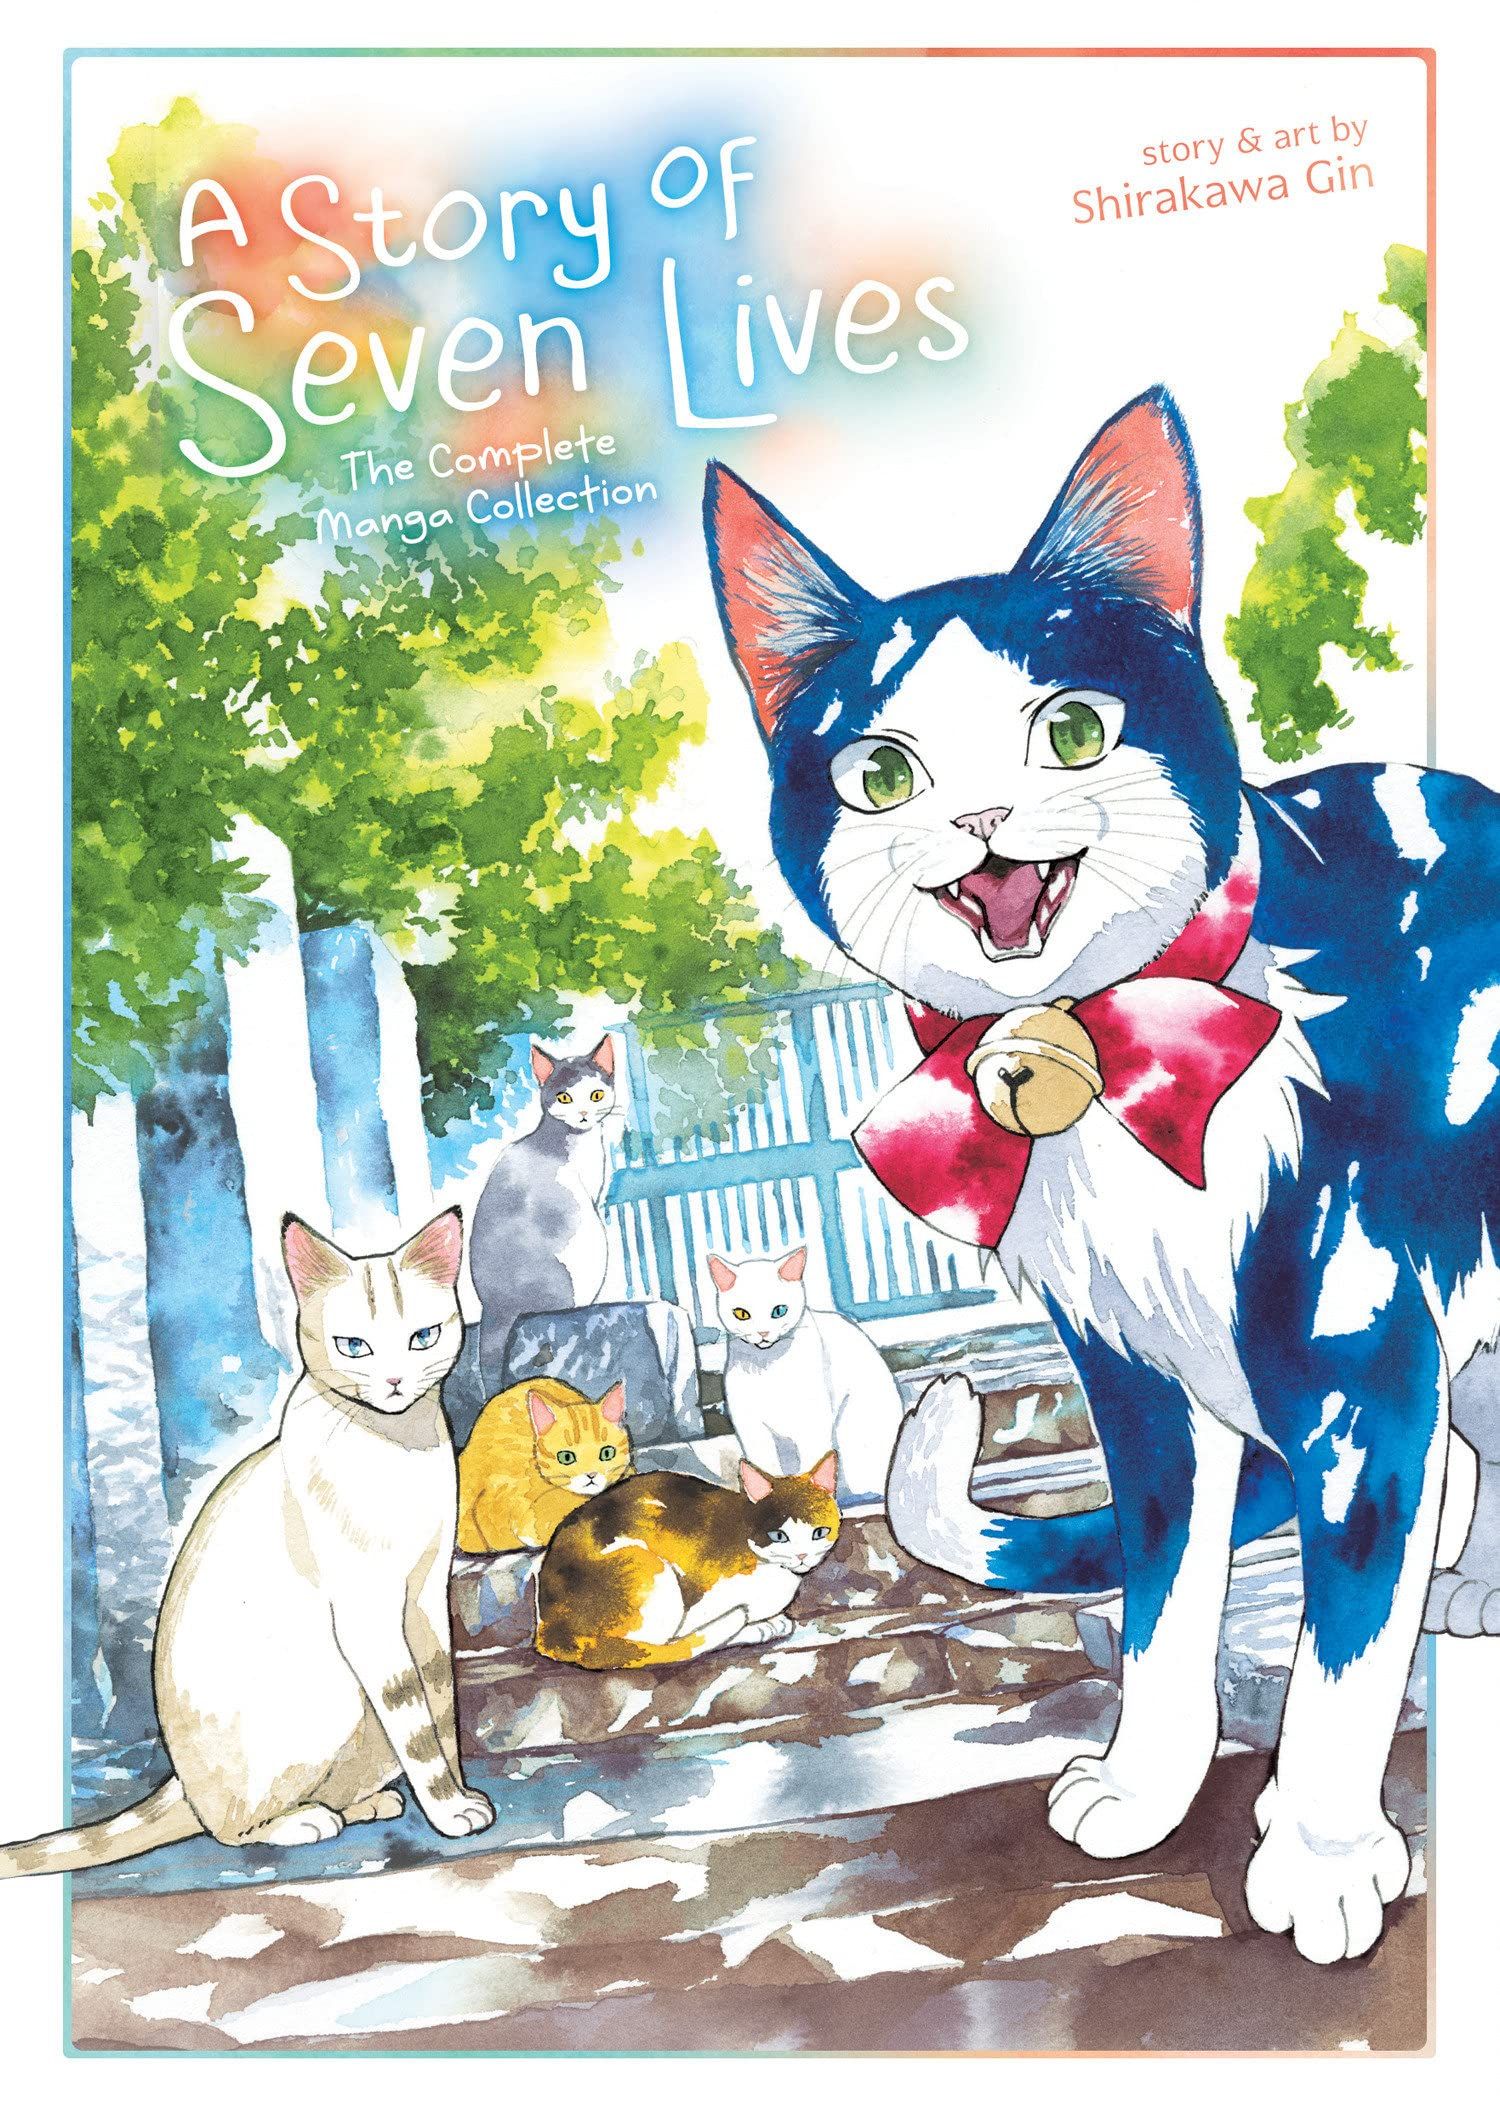 A Story of Seven Lives by Shirakawa Gin cover